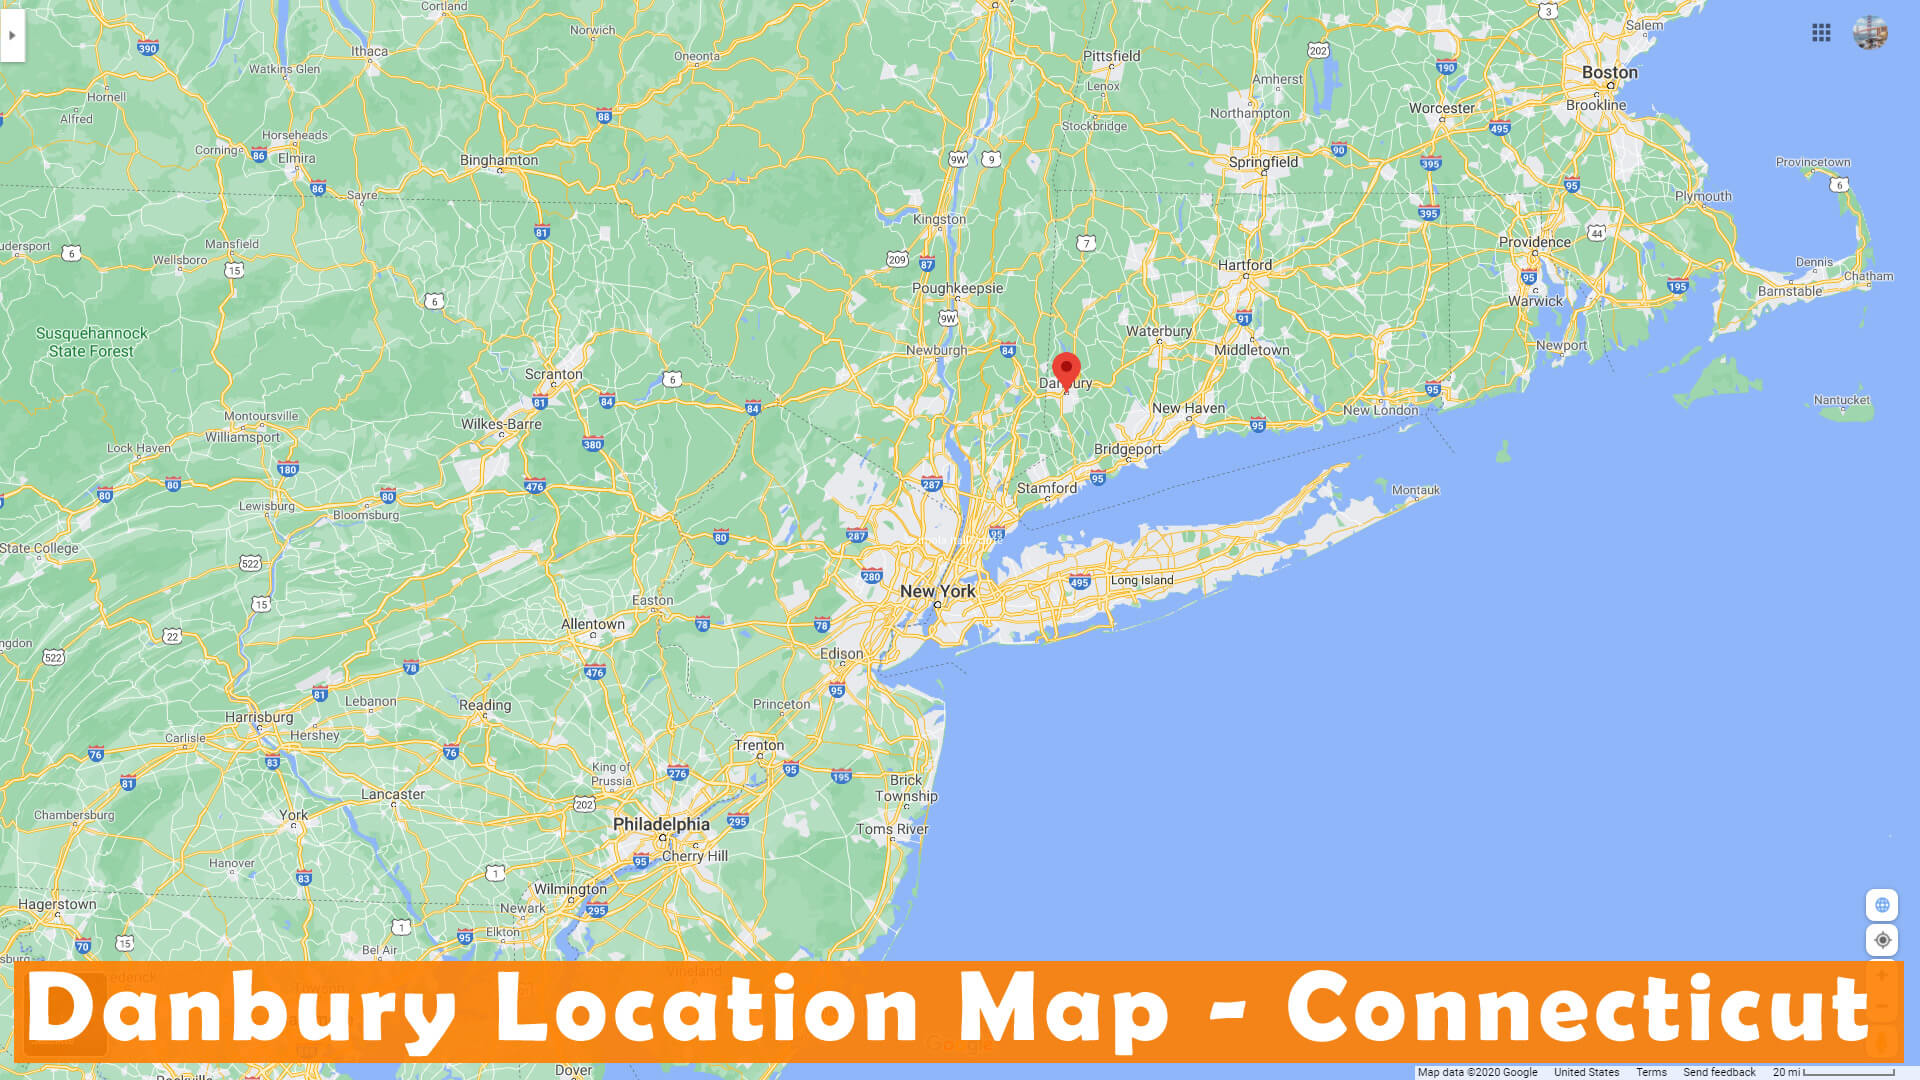 Danbury Location Map Connecticut